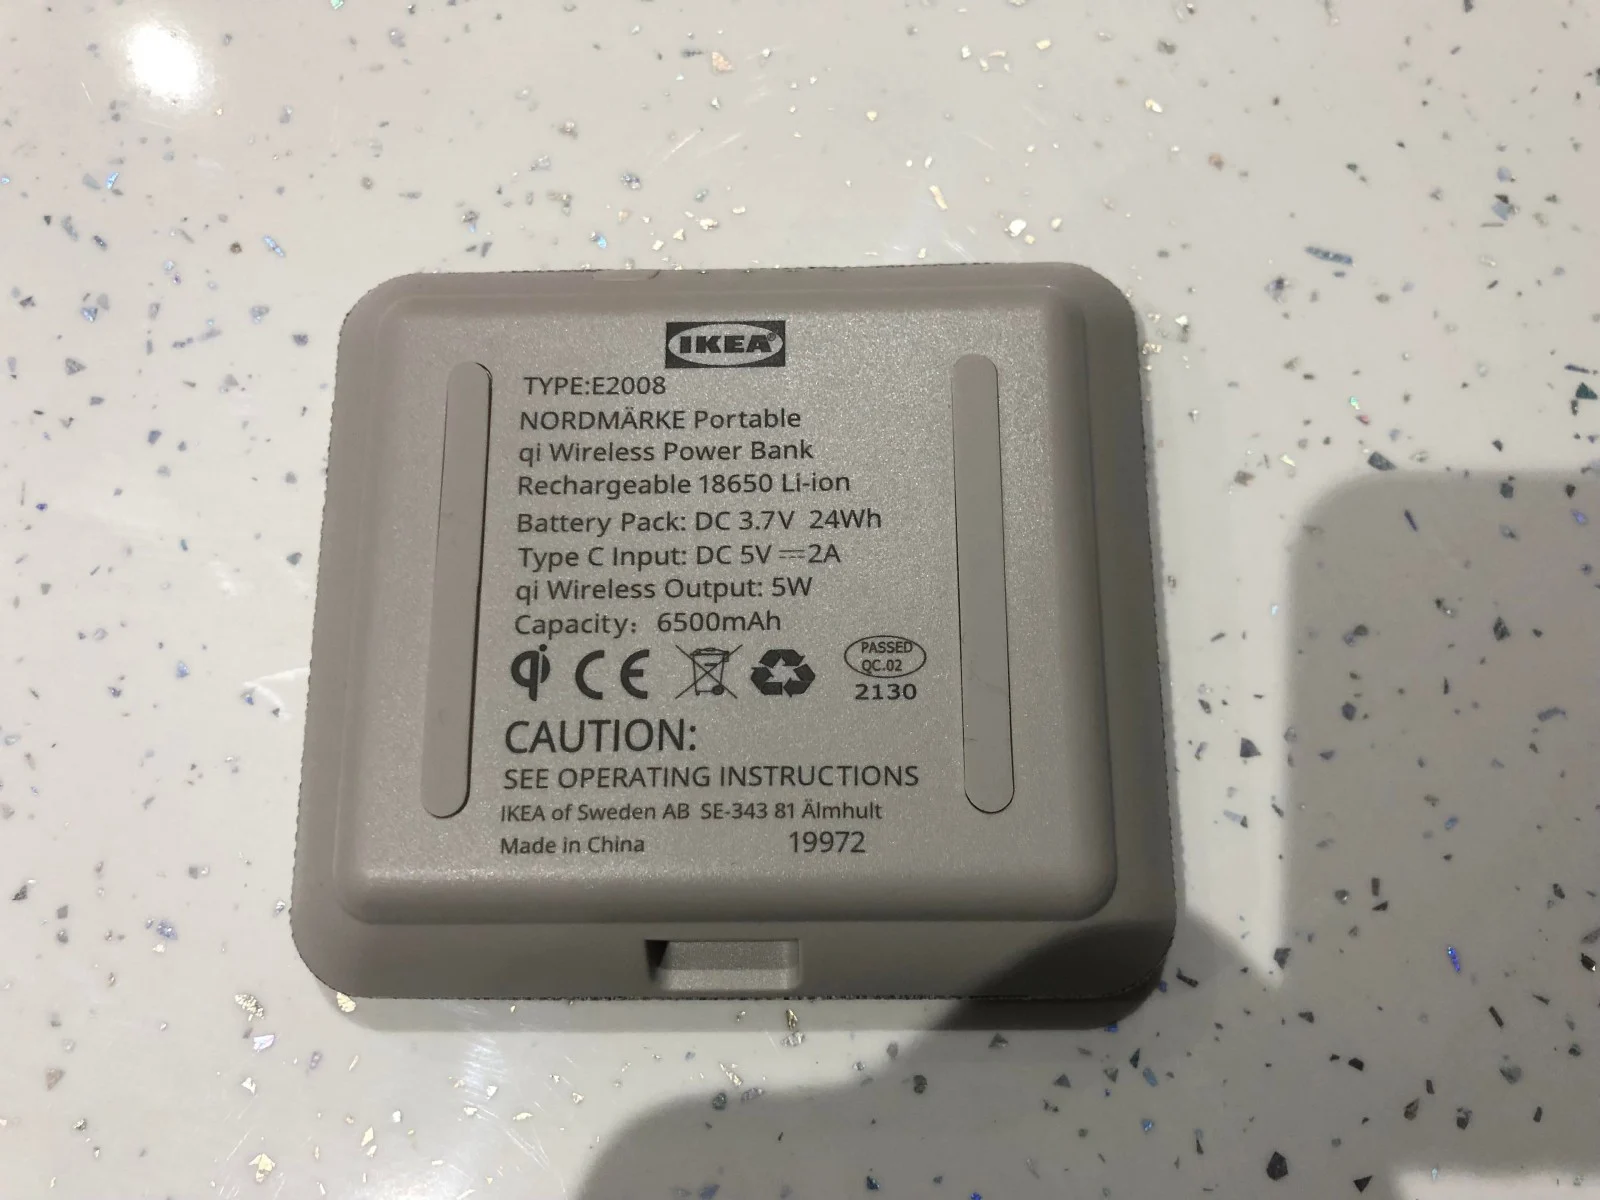 IKEA Nordmarke Qi charger